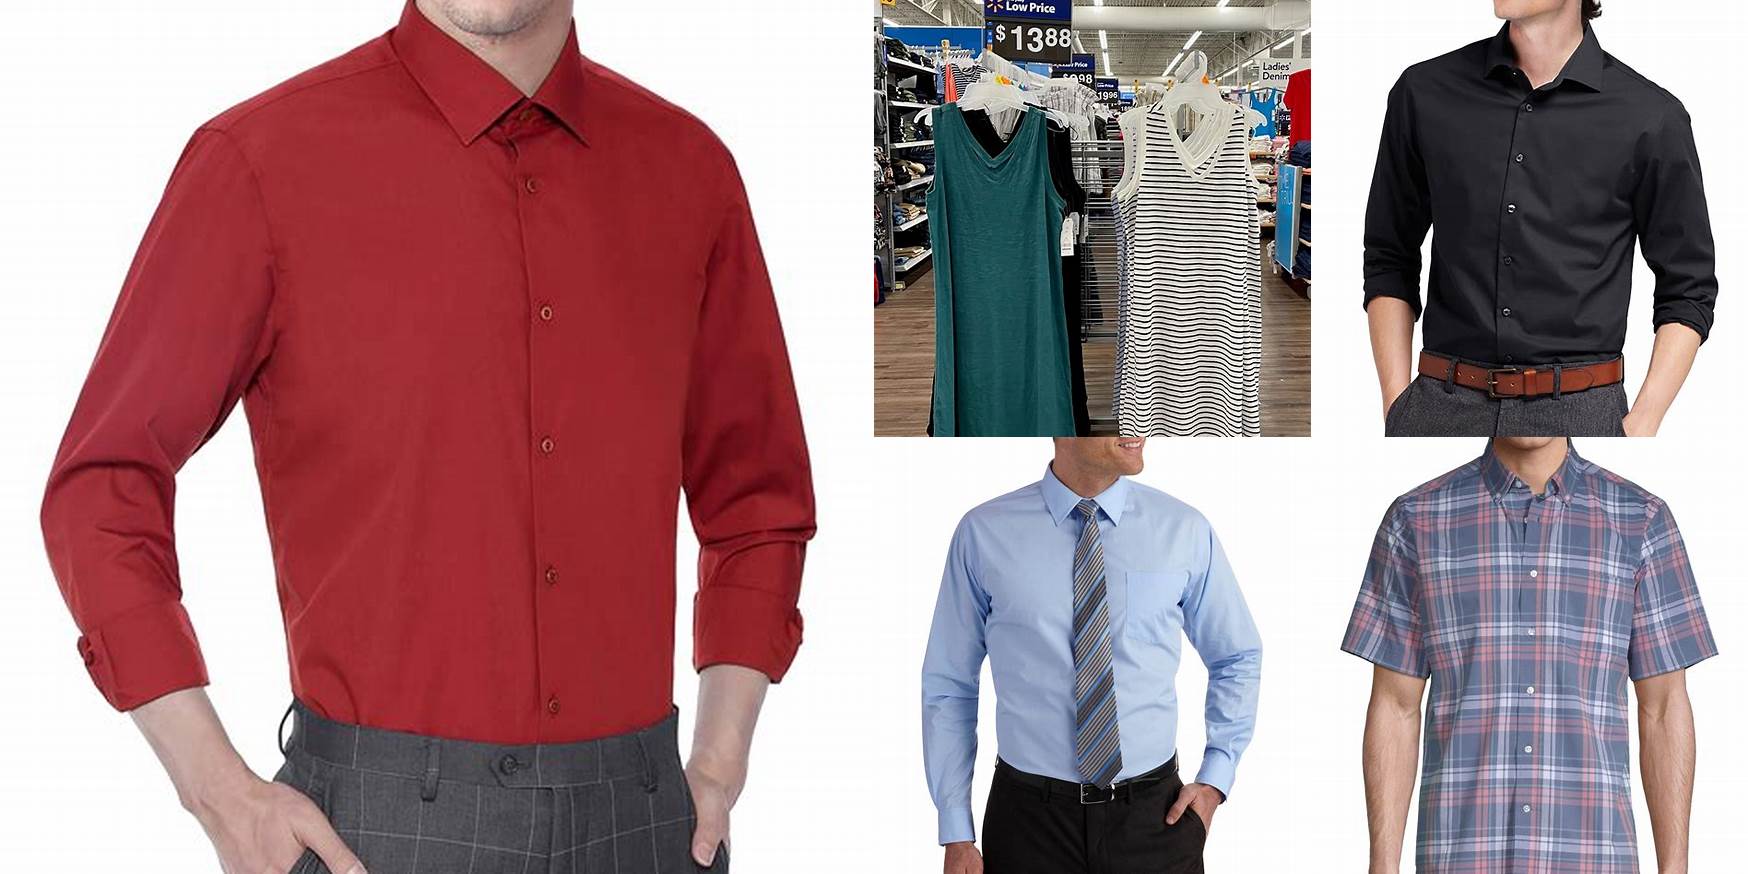 Does Walmart Sell Dress Shirts